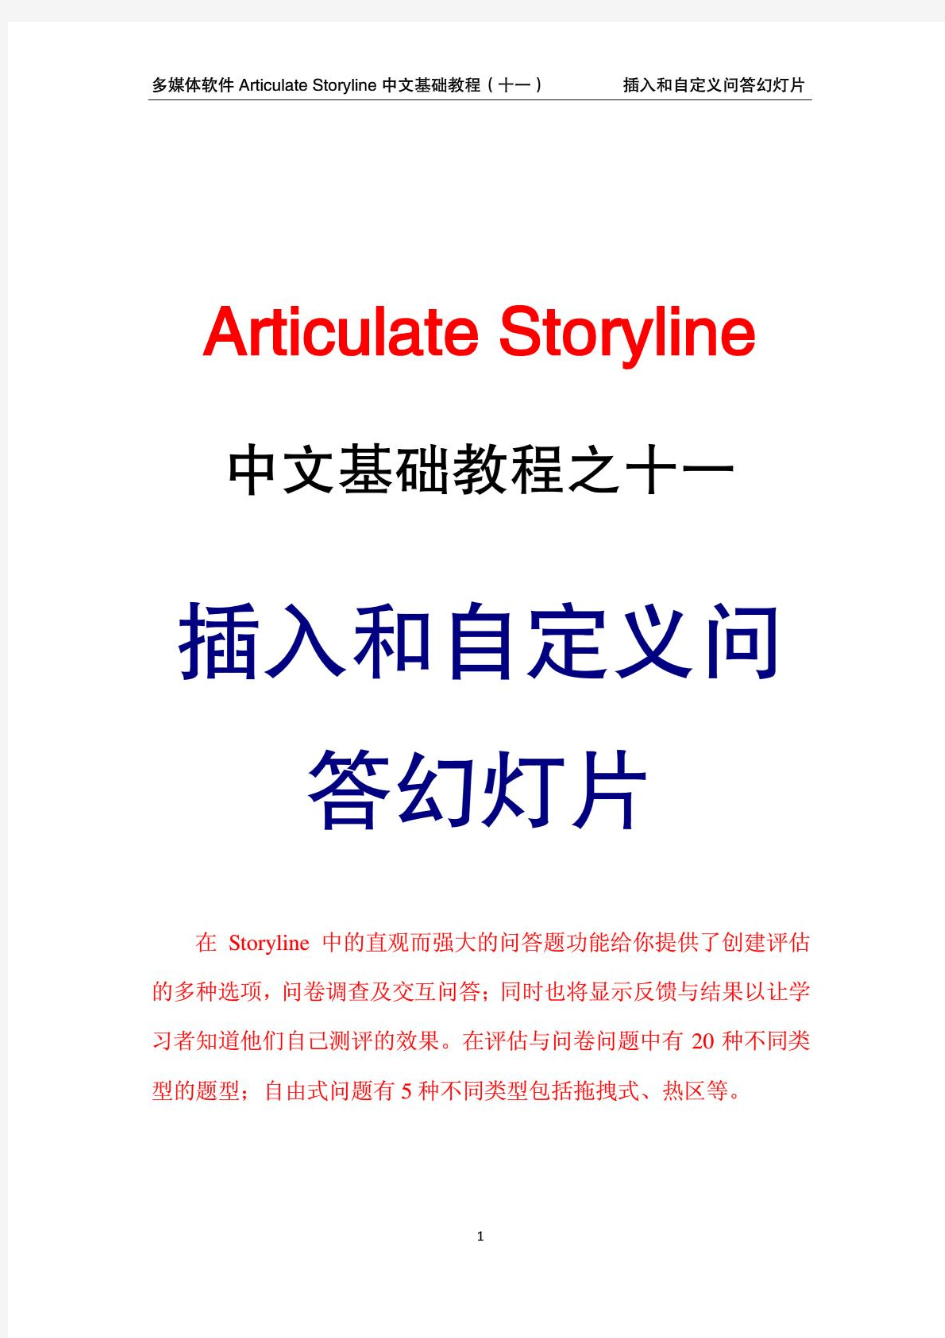 Articulate Storyline 中文基础教程-插入和自定义问答幻灯片